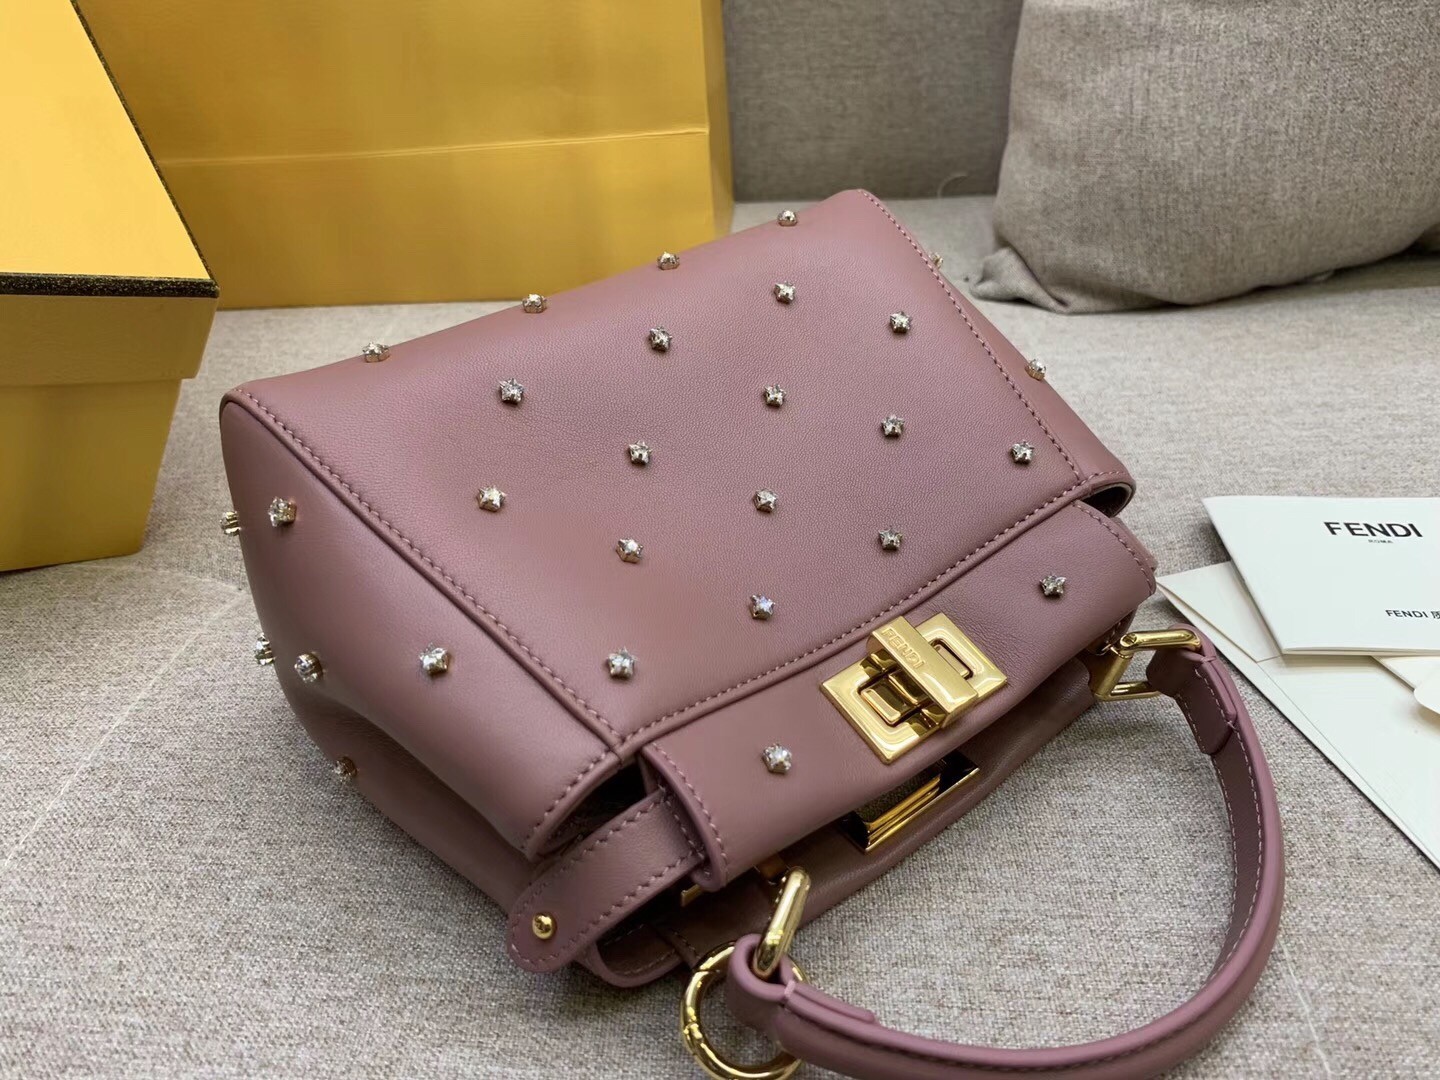 Fendi Peekaboo XS Bag With Star Studs In Black Nappa Leather  903